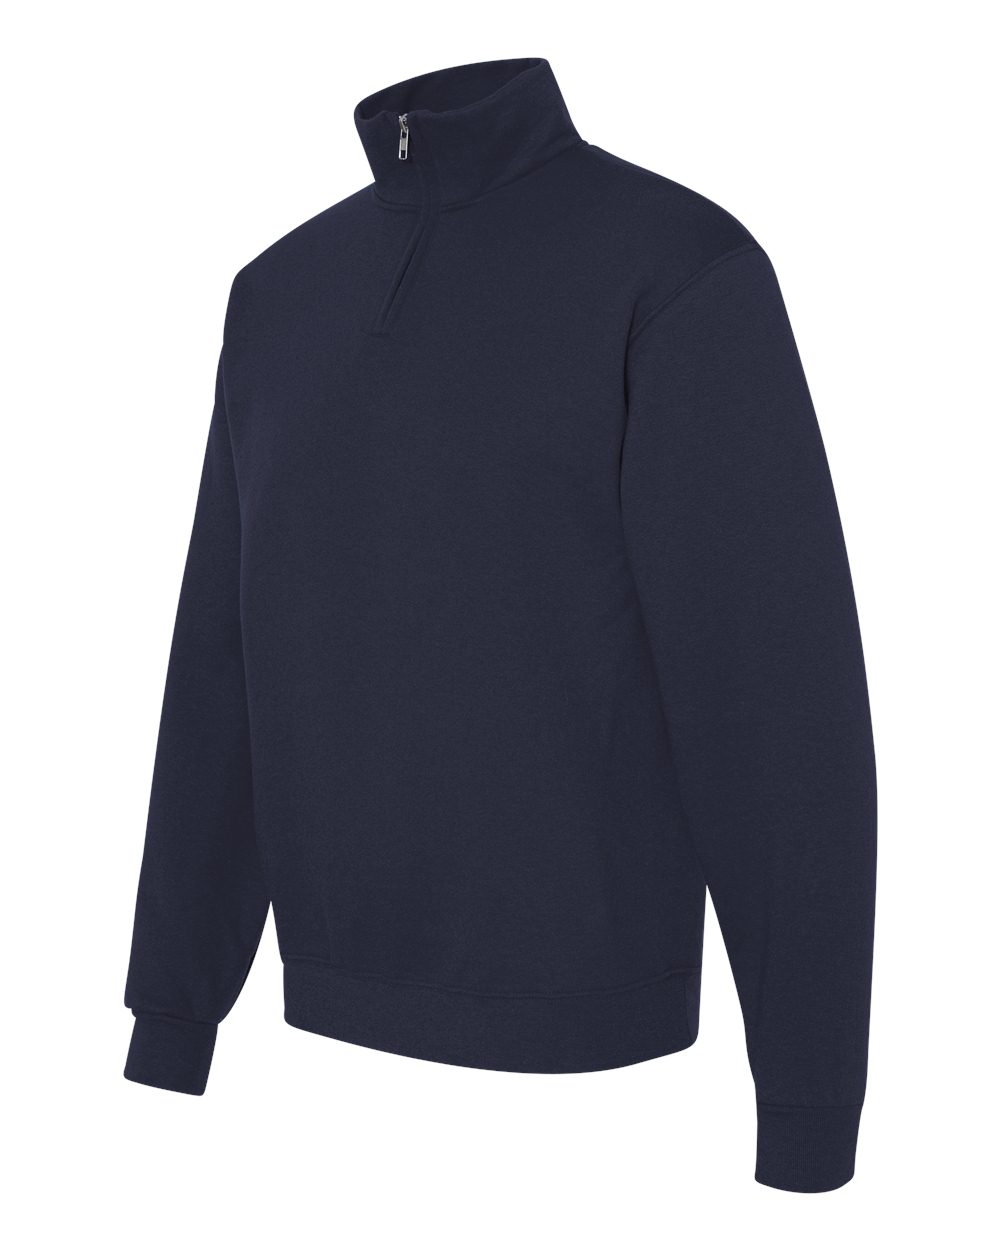 JERZEES 995MR - Nublend Cadet Collar Sweatshirt